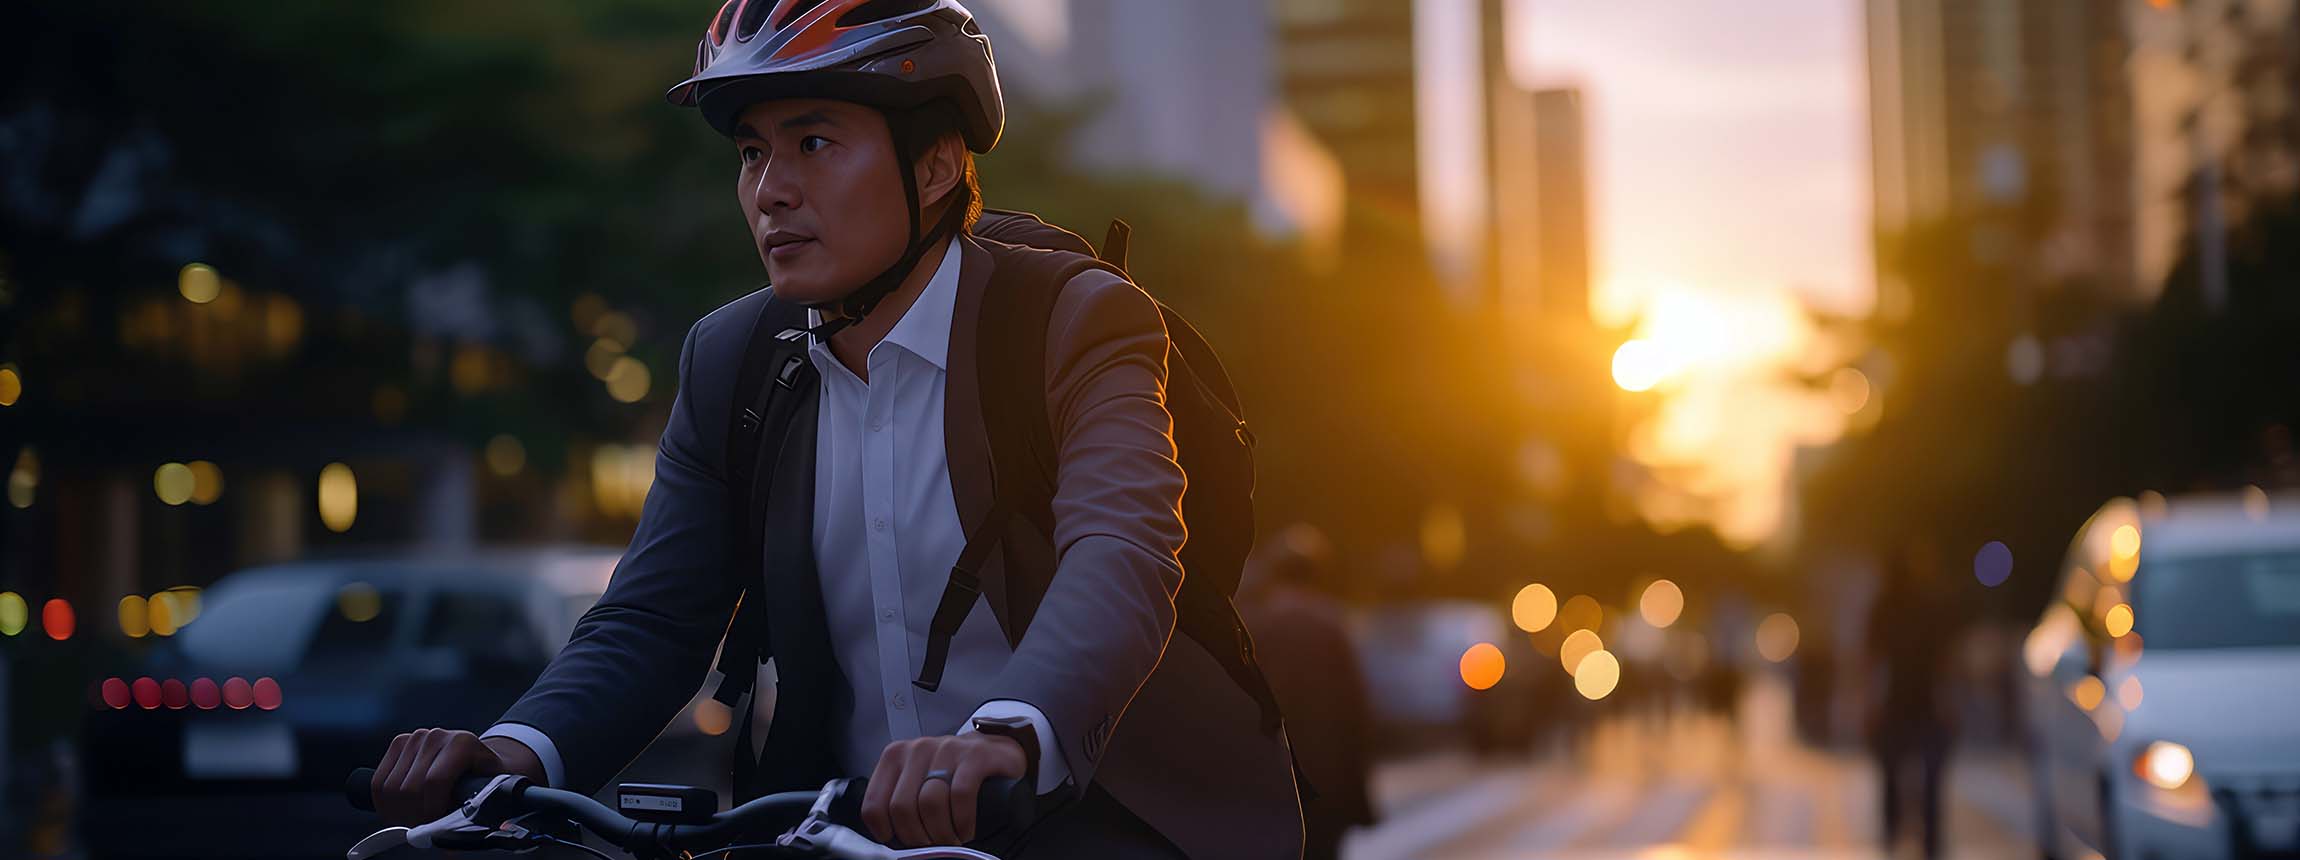 Businessman wearing helmet biking with bicycle on road in city to work